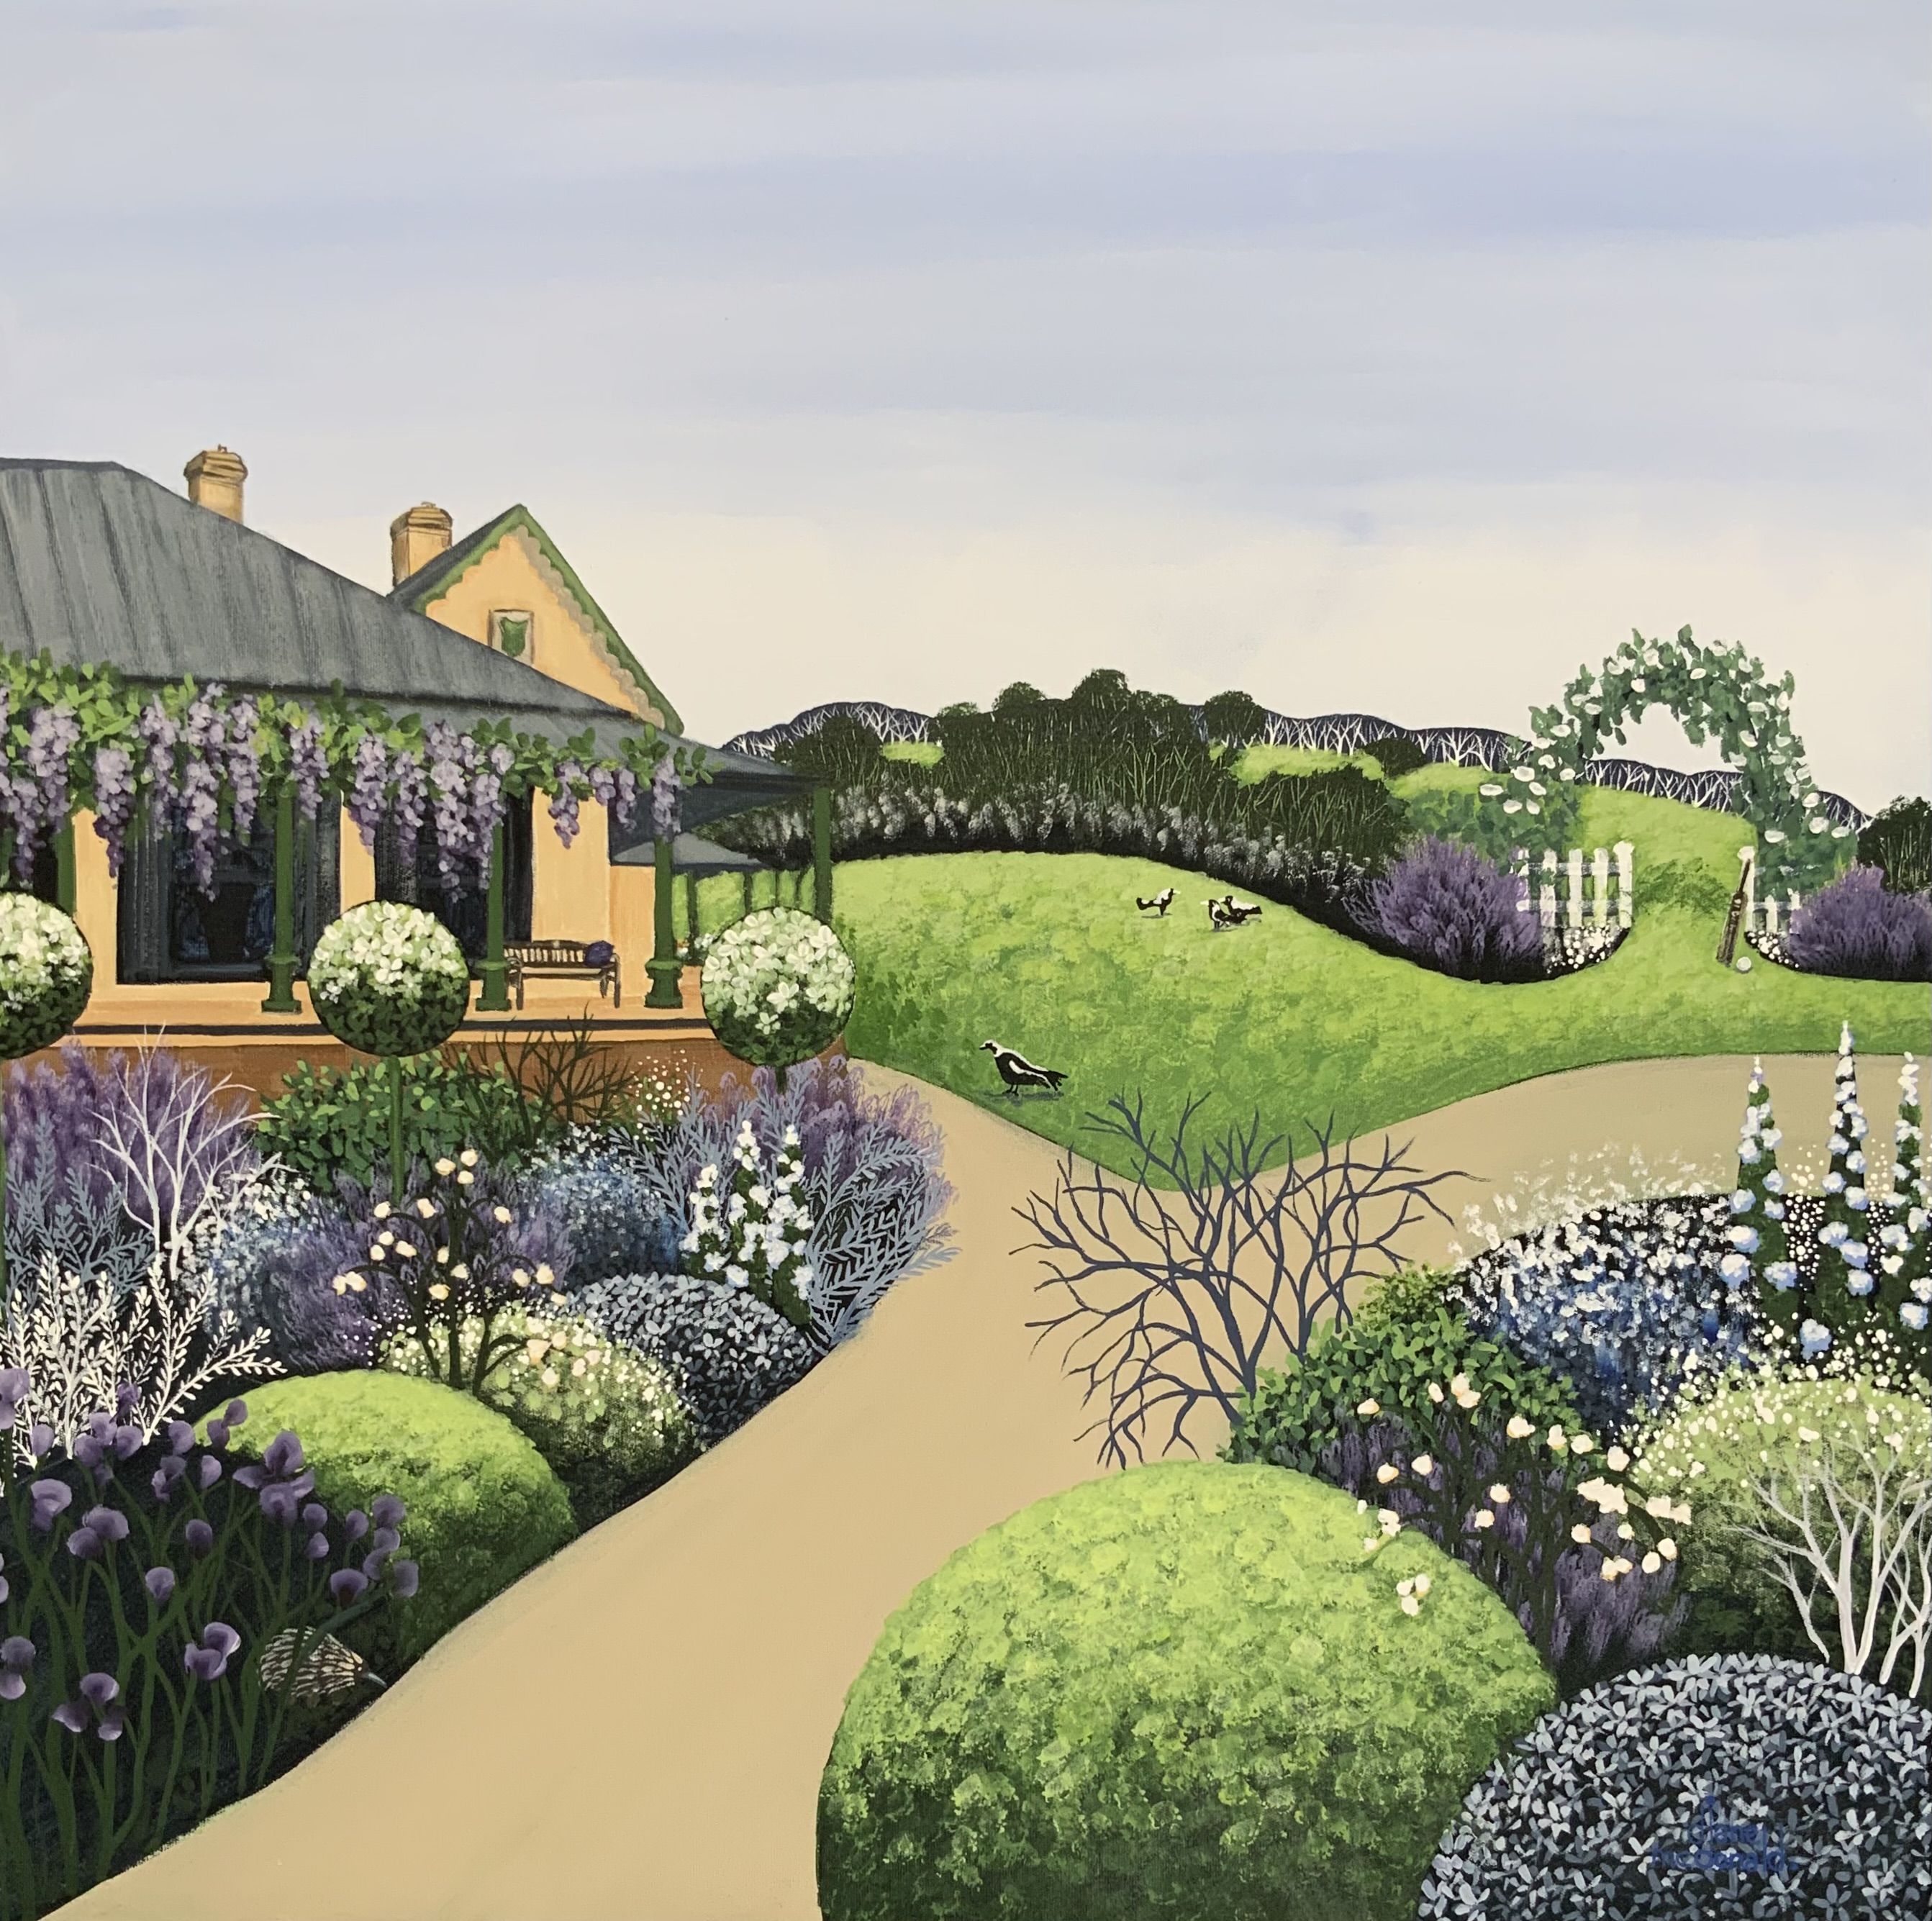 The Homestead by Diane McDonald | Lethbridge 20000 2022 Finalists | Lethbridge Gallery